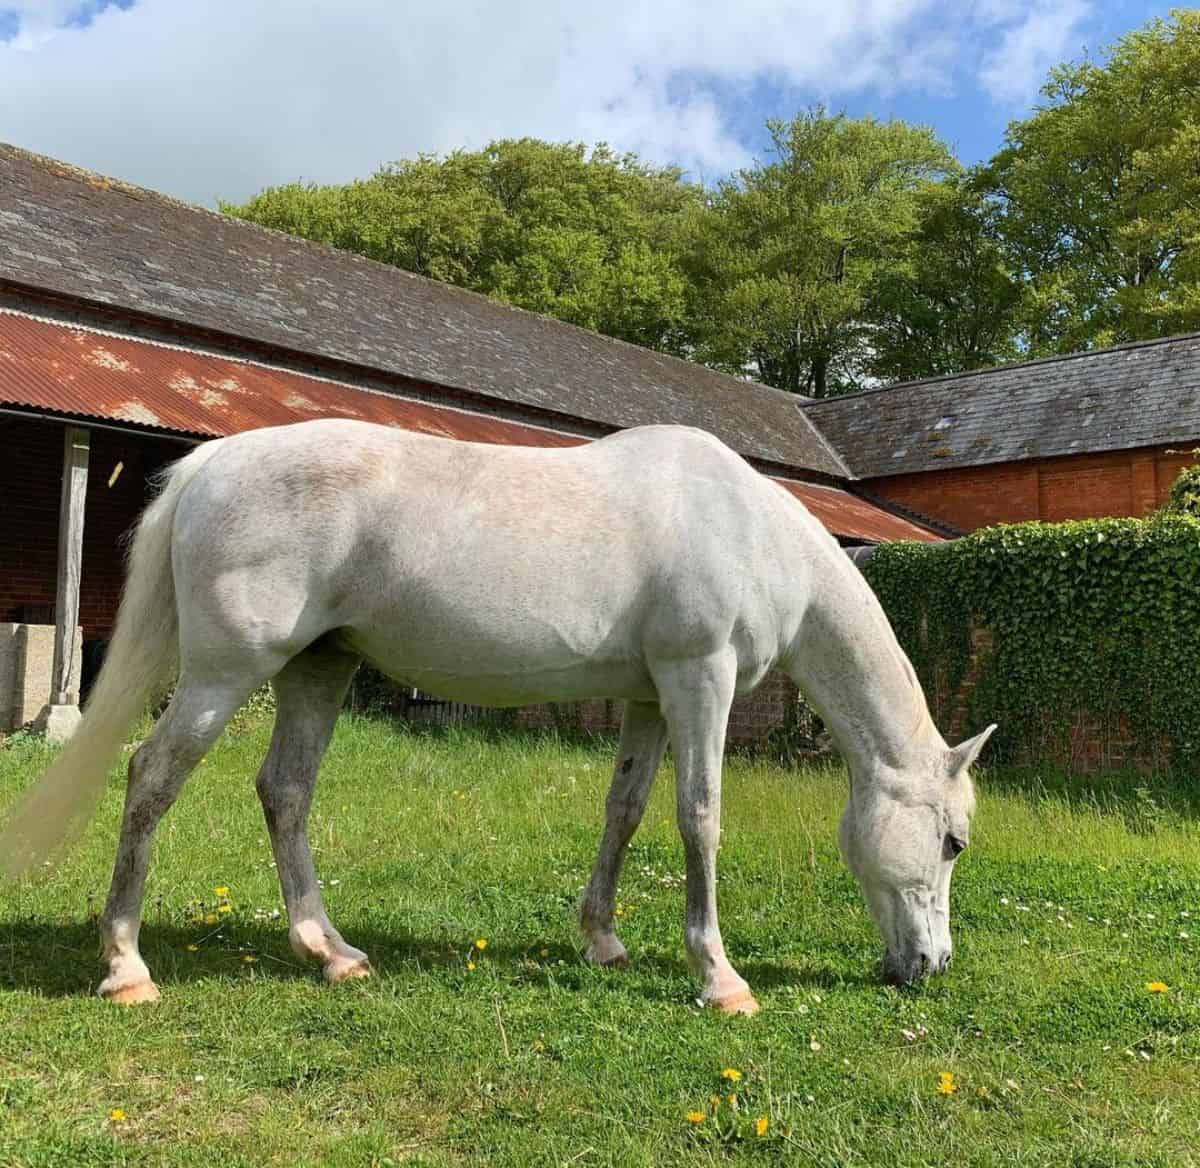 A marvelous gray horse eating grass near a barn.